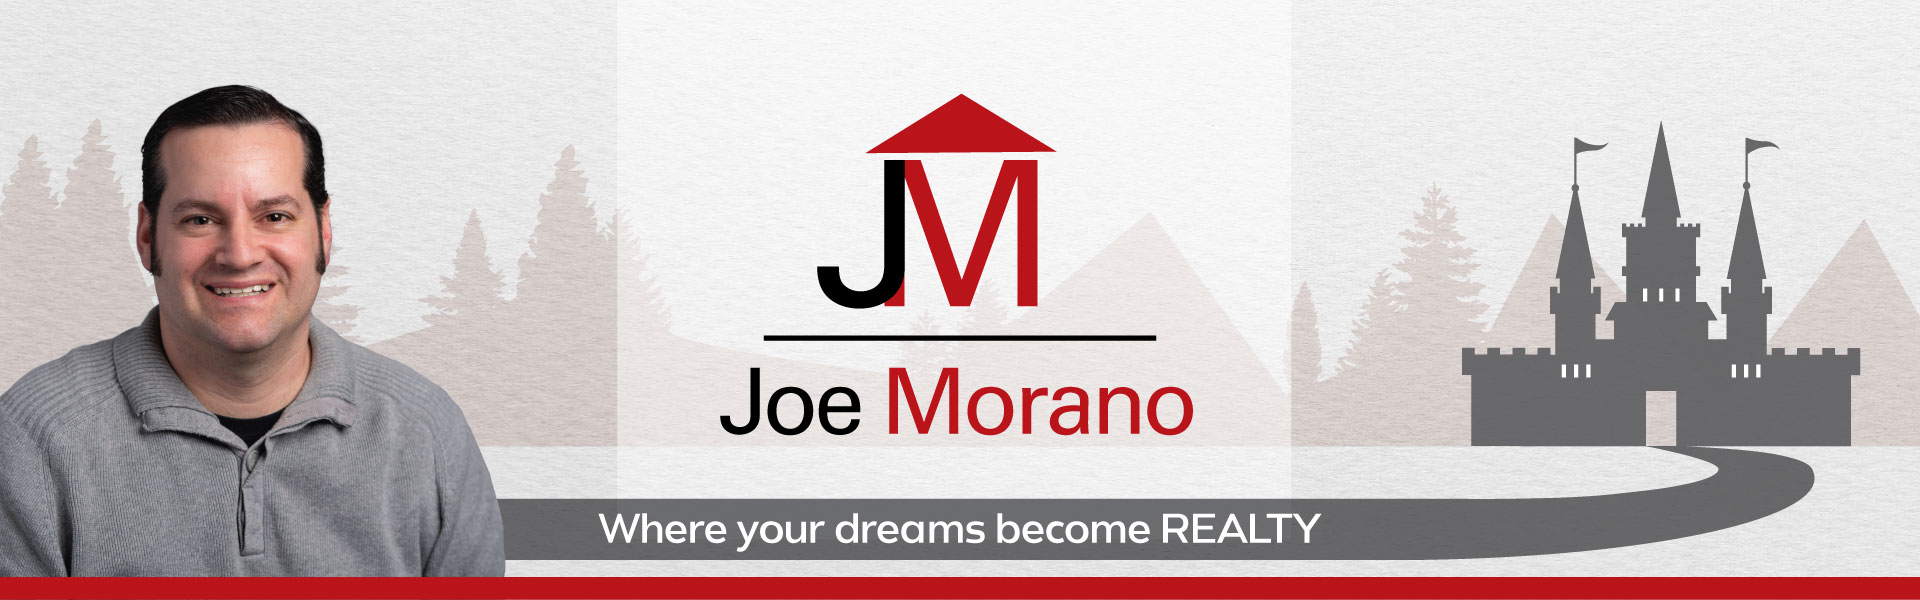 Joe Morano